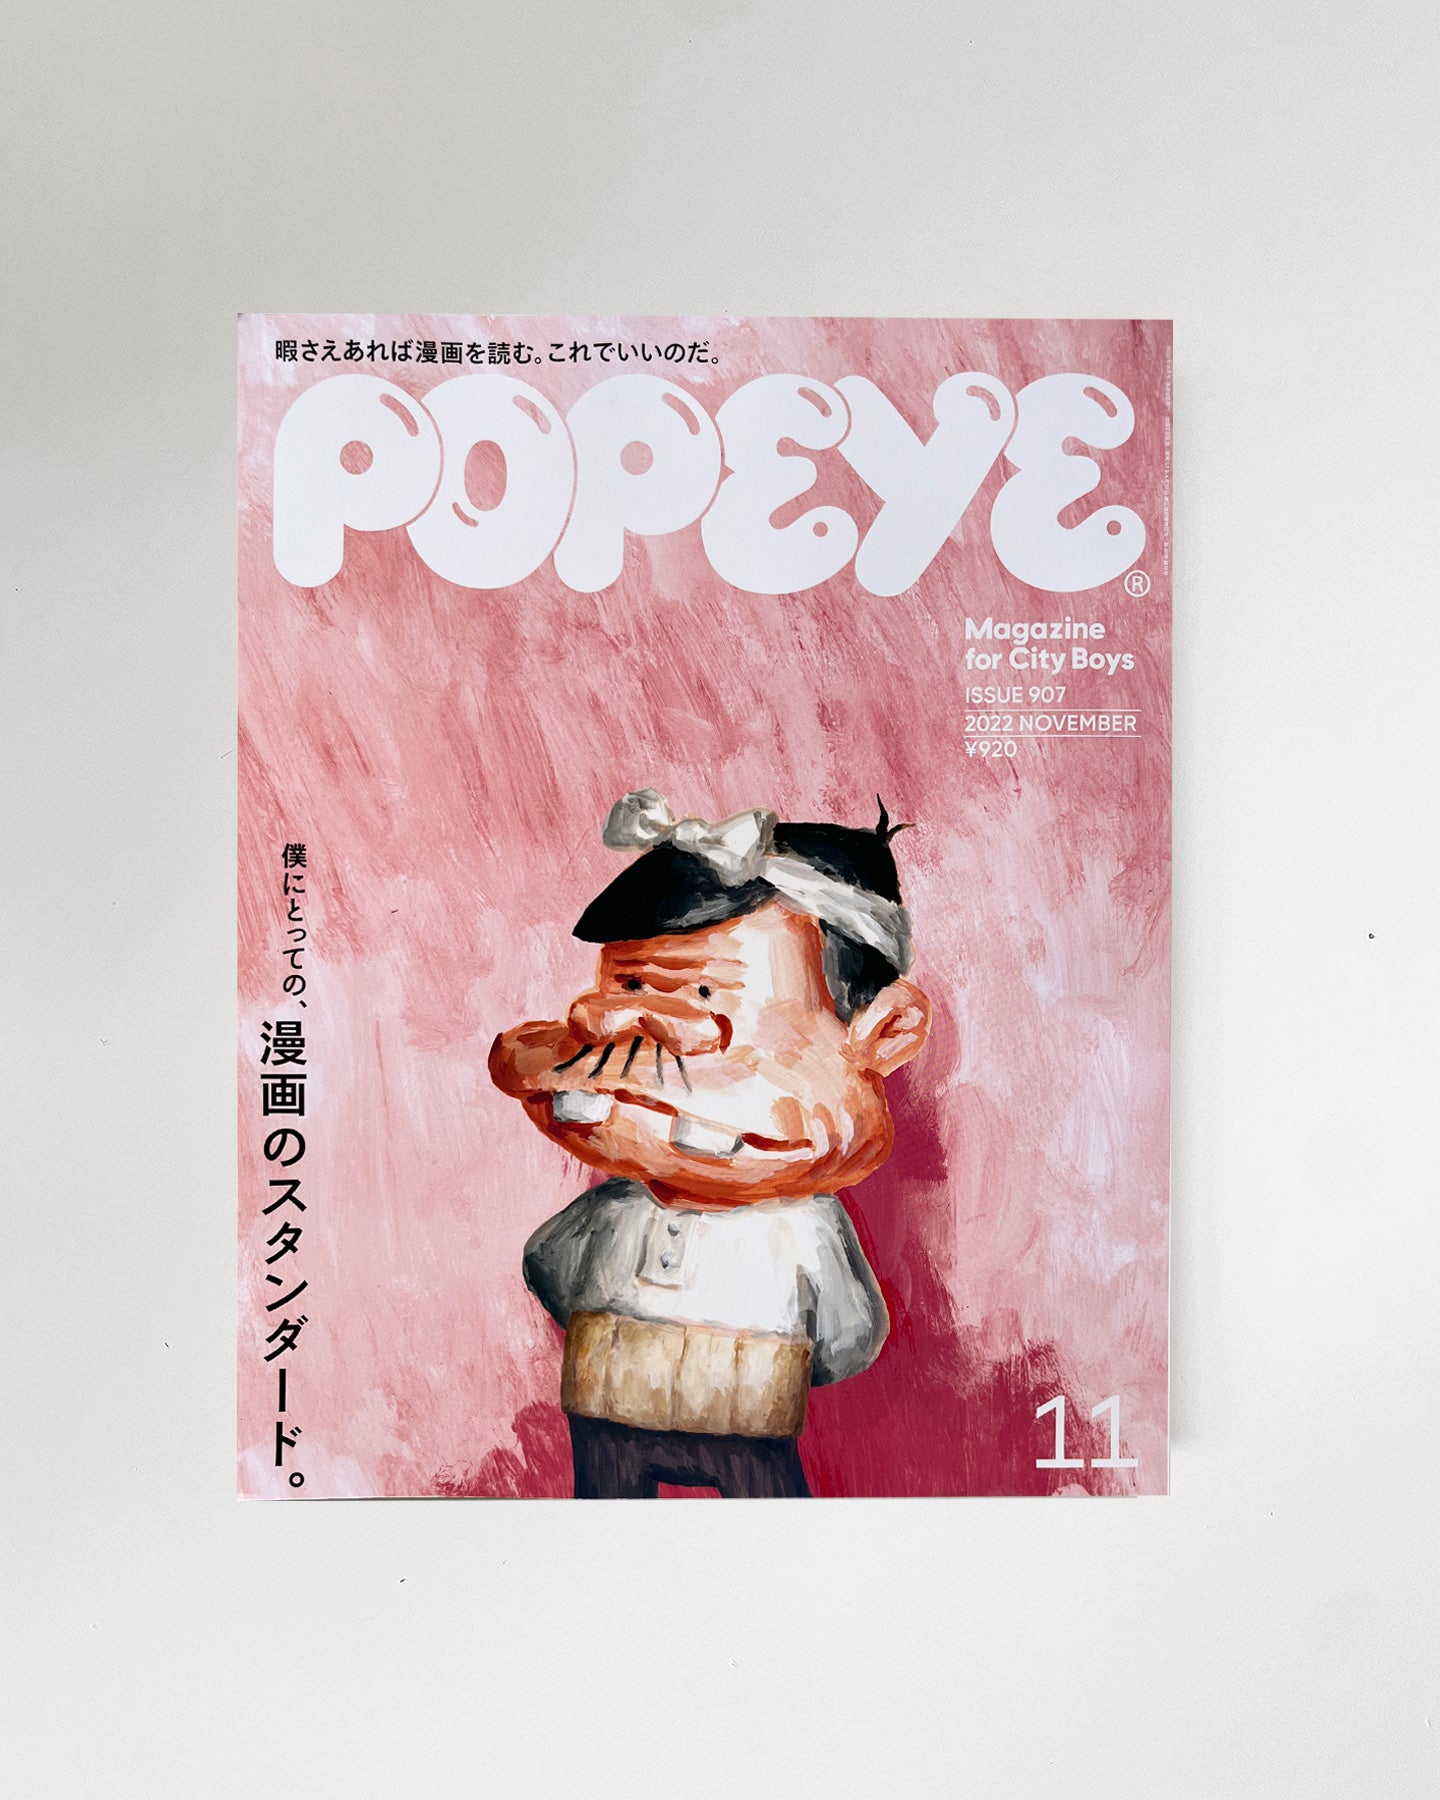 Popeye November Issue 907 Cover